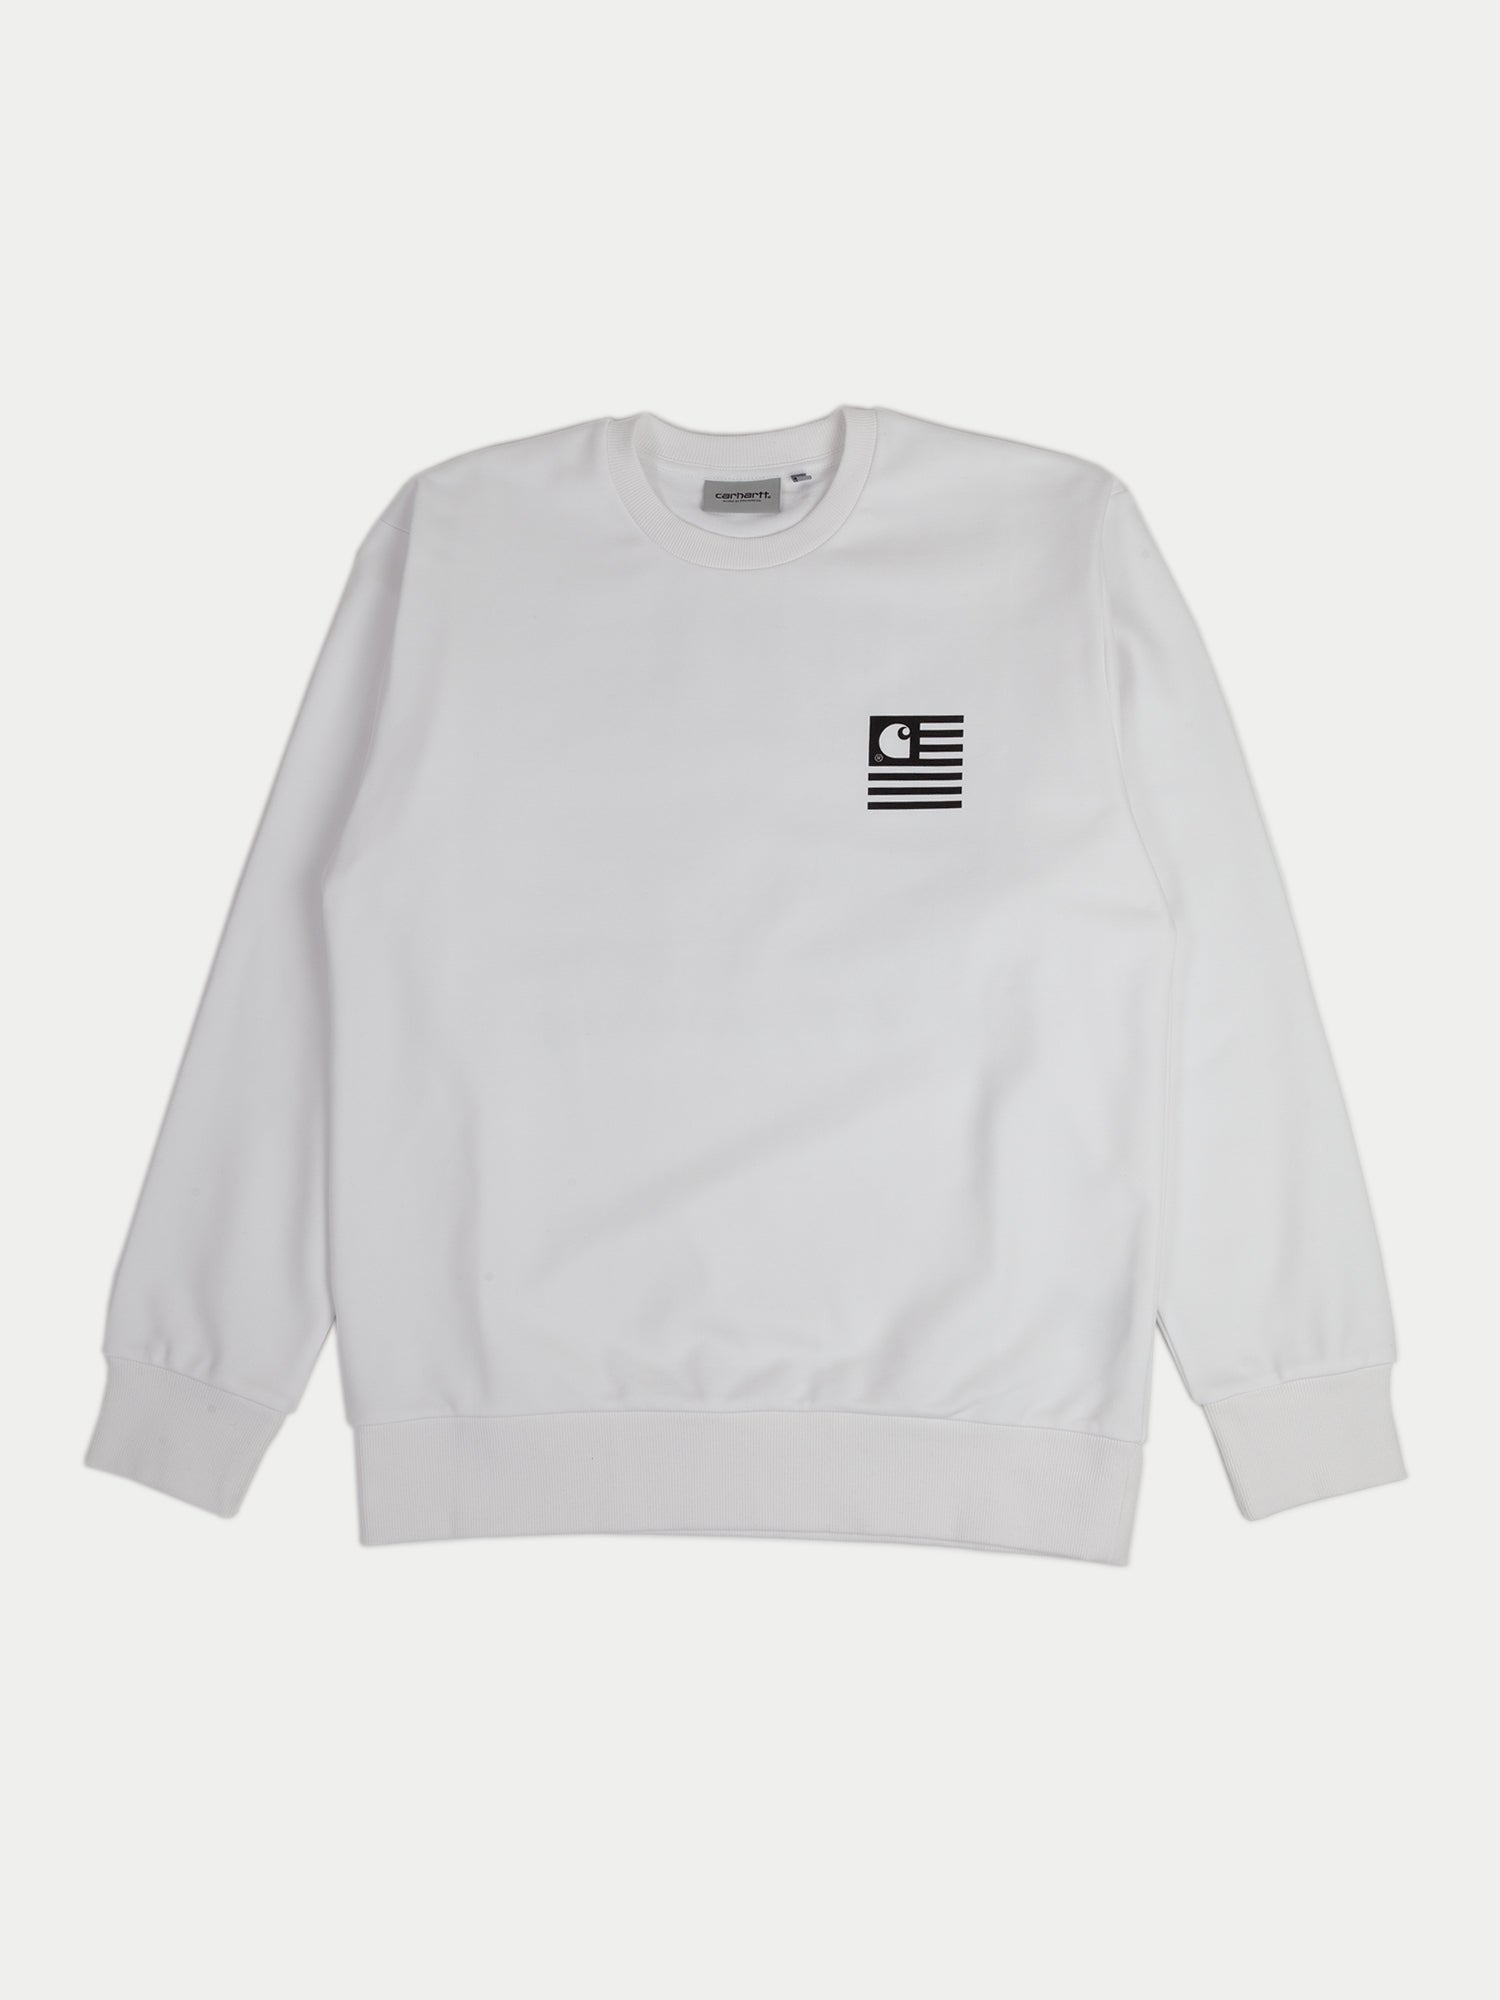 Carhartt State Patch Sweatshirt (White)